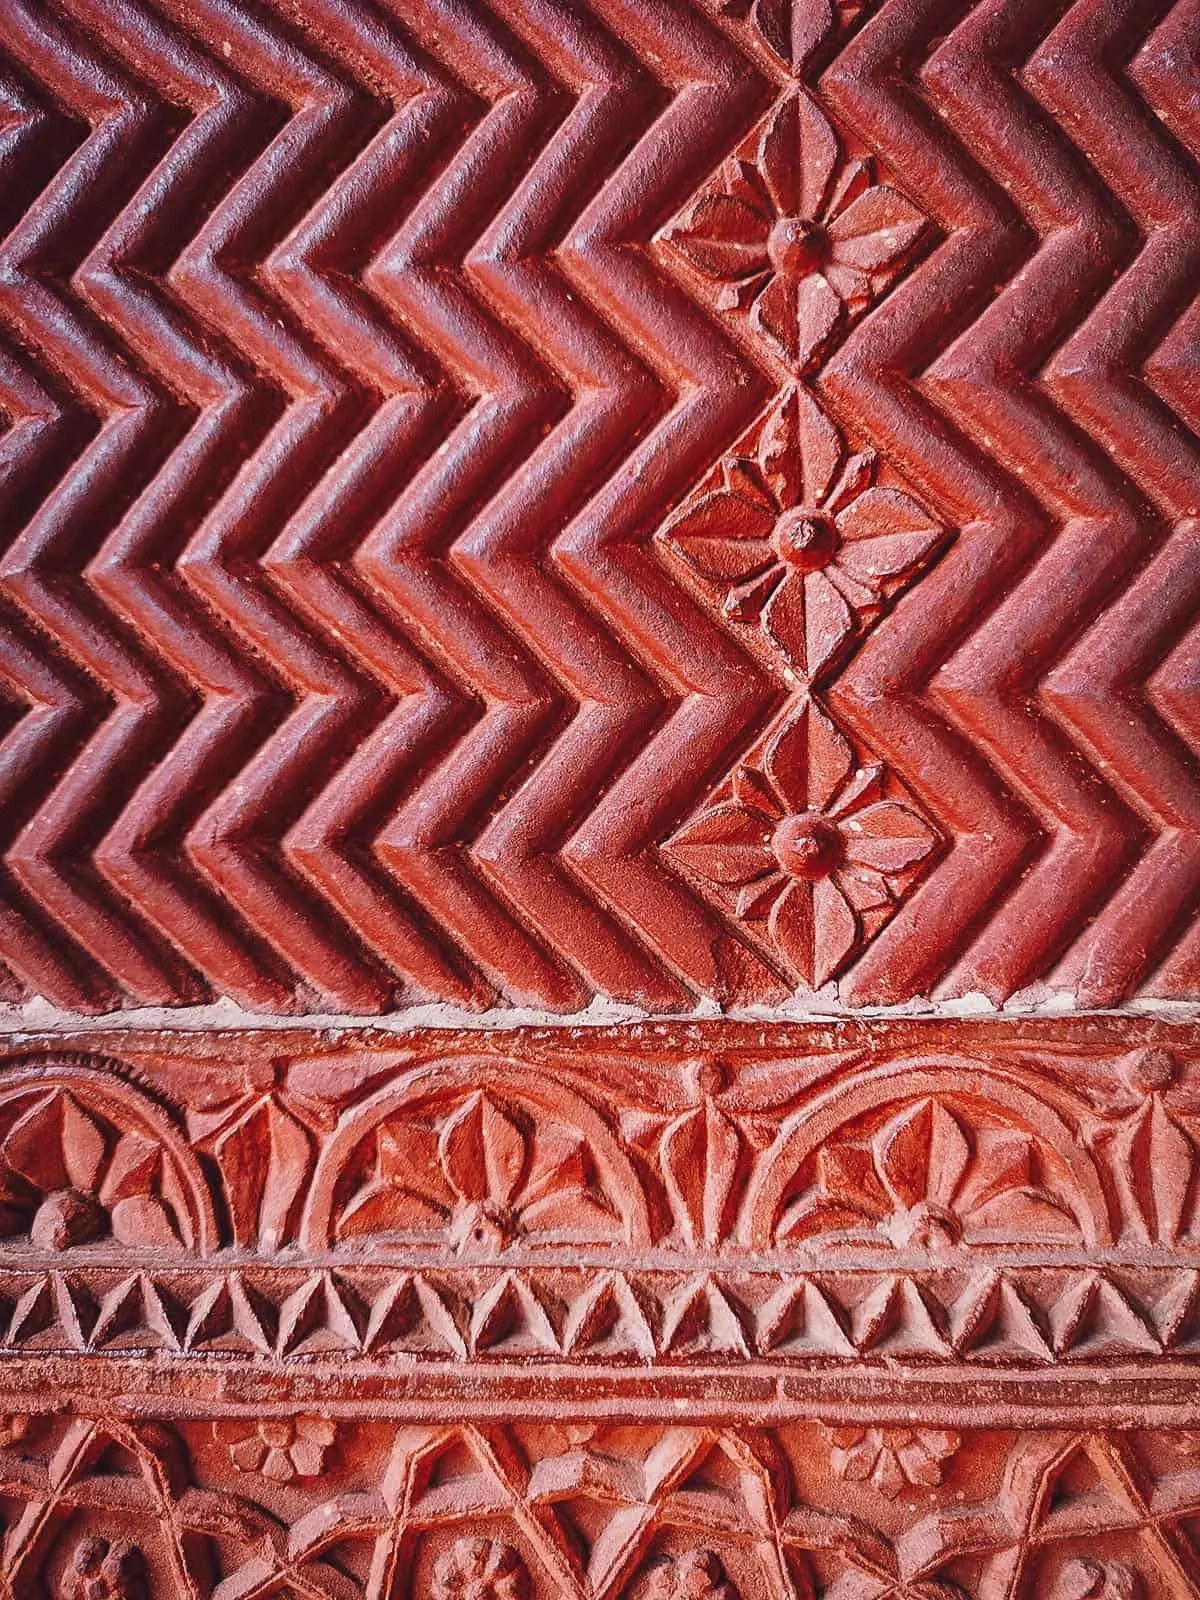 Fatehpur Sikri, Agra, India